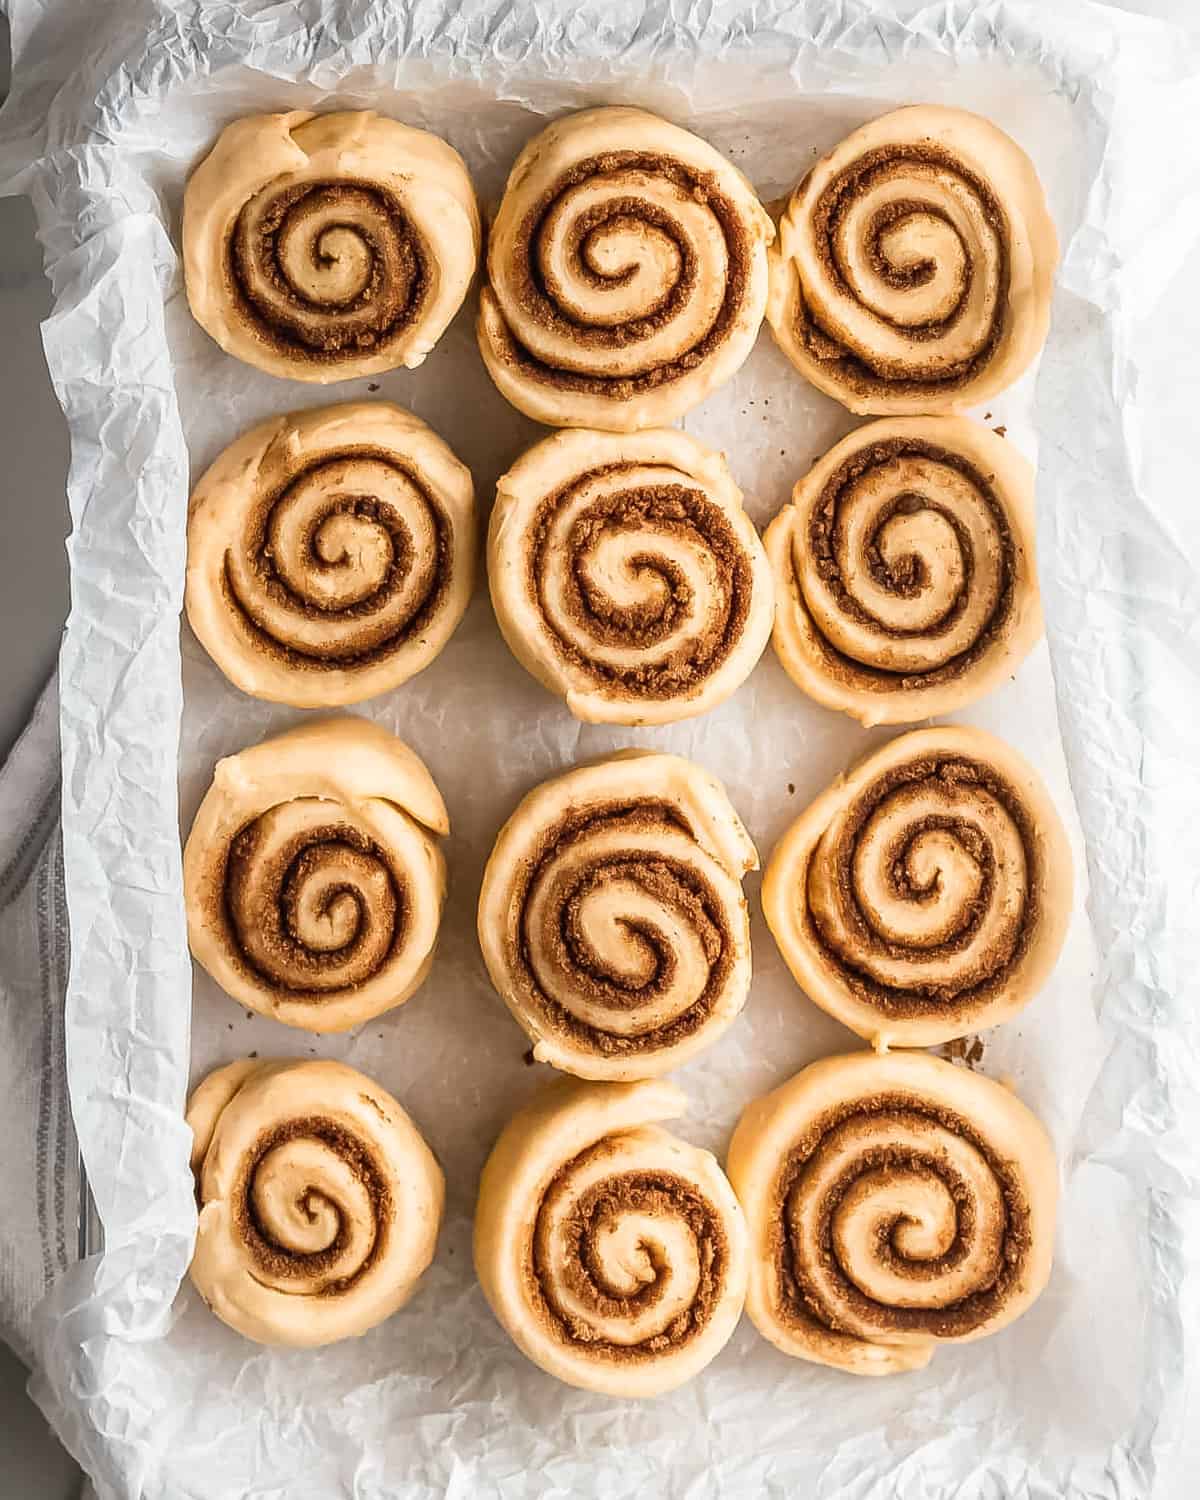 unbaked cinnamon rolls in a pan.